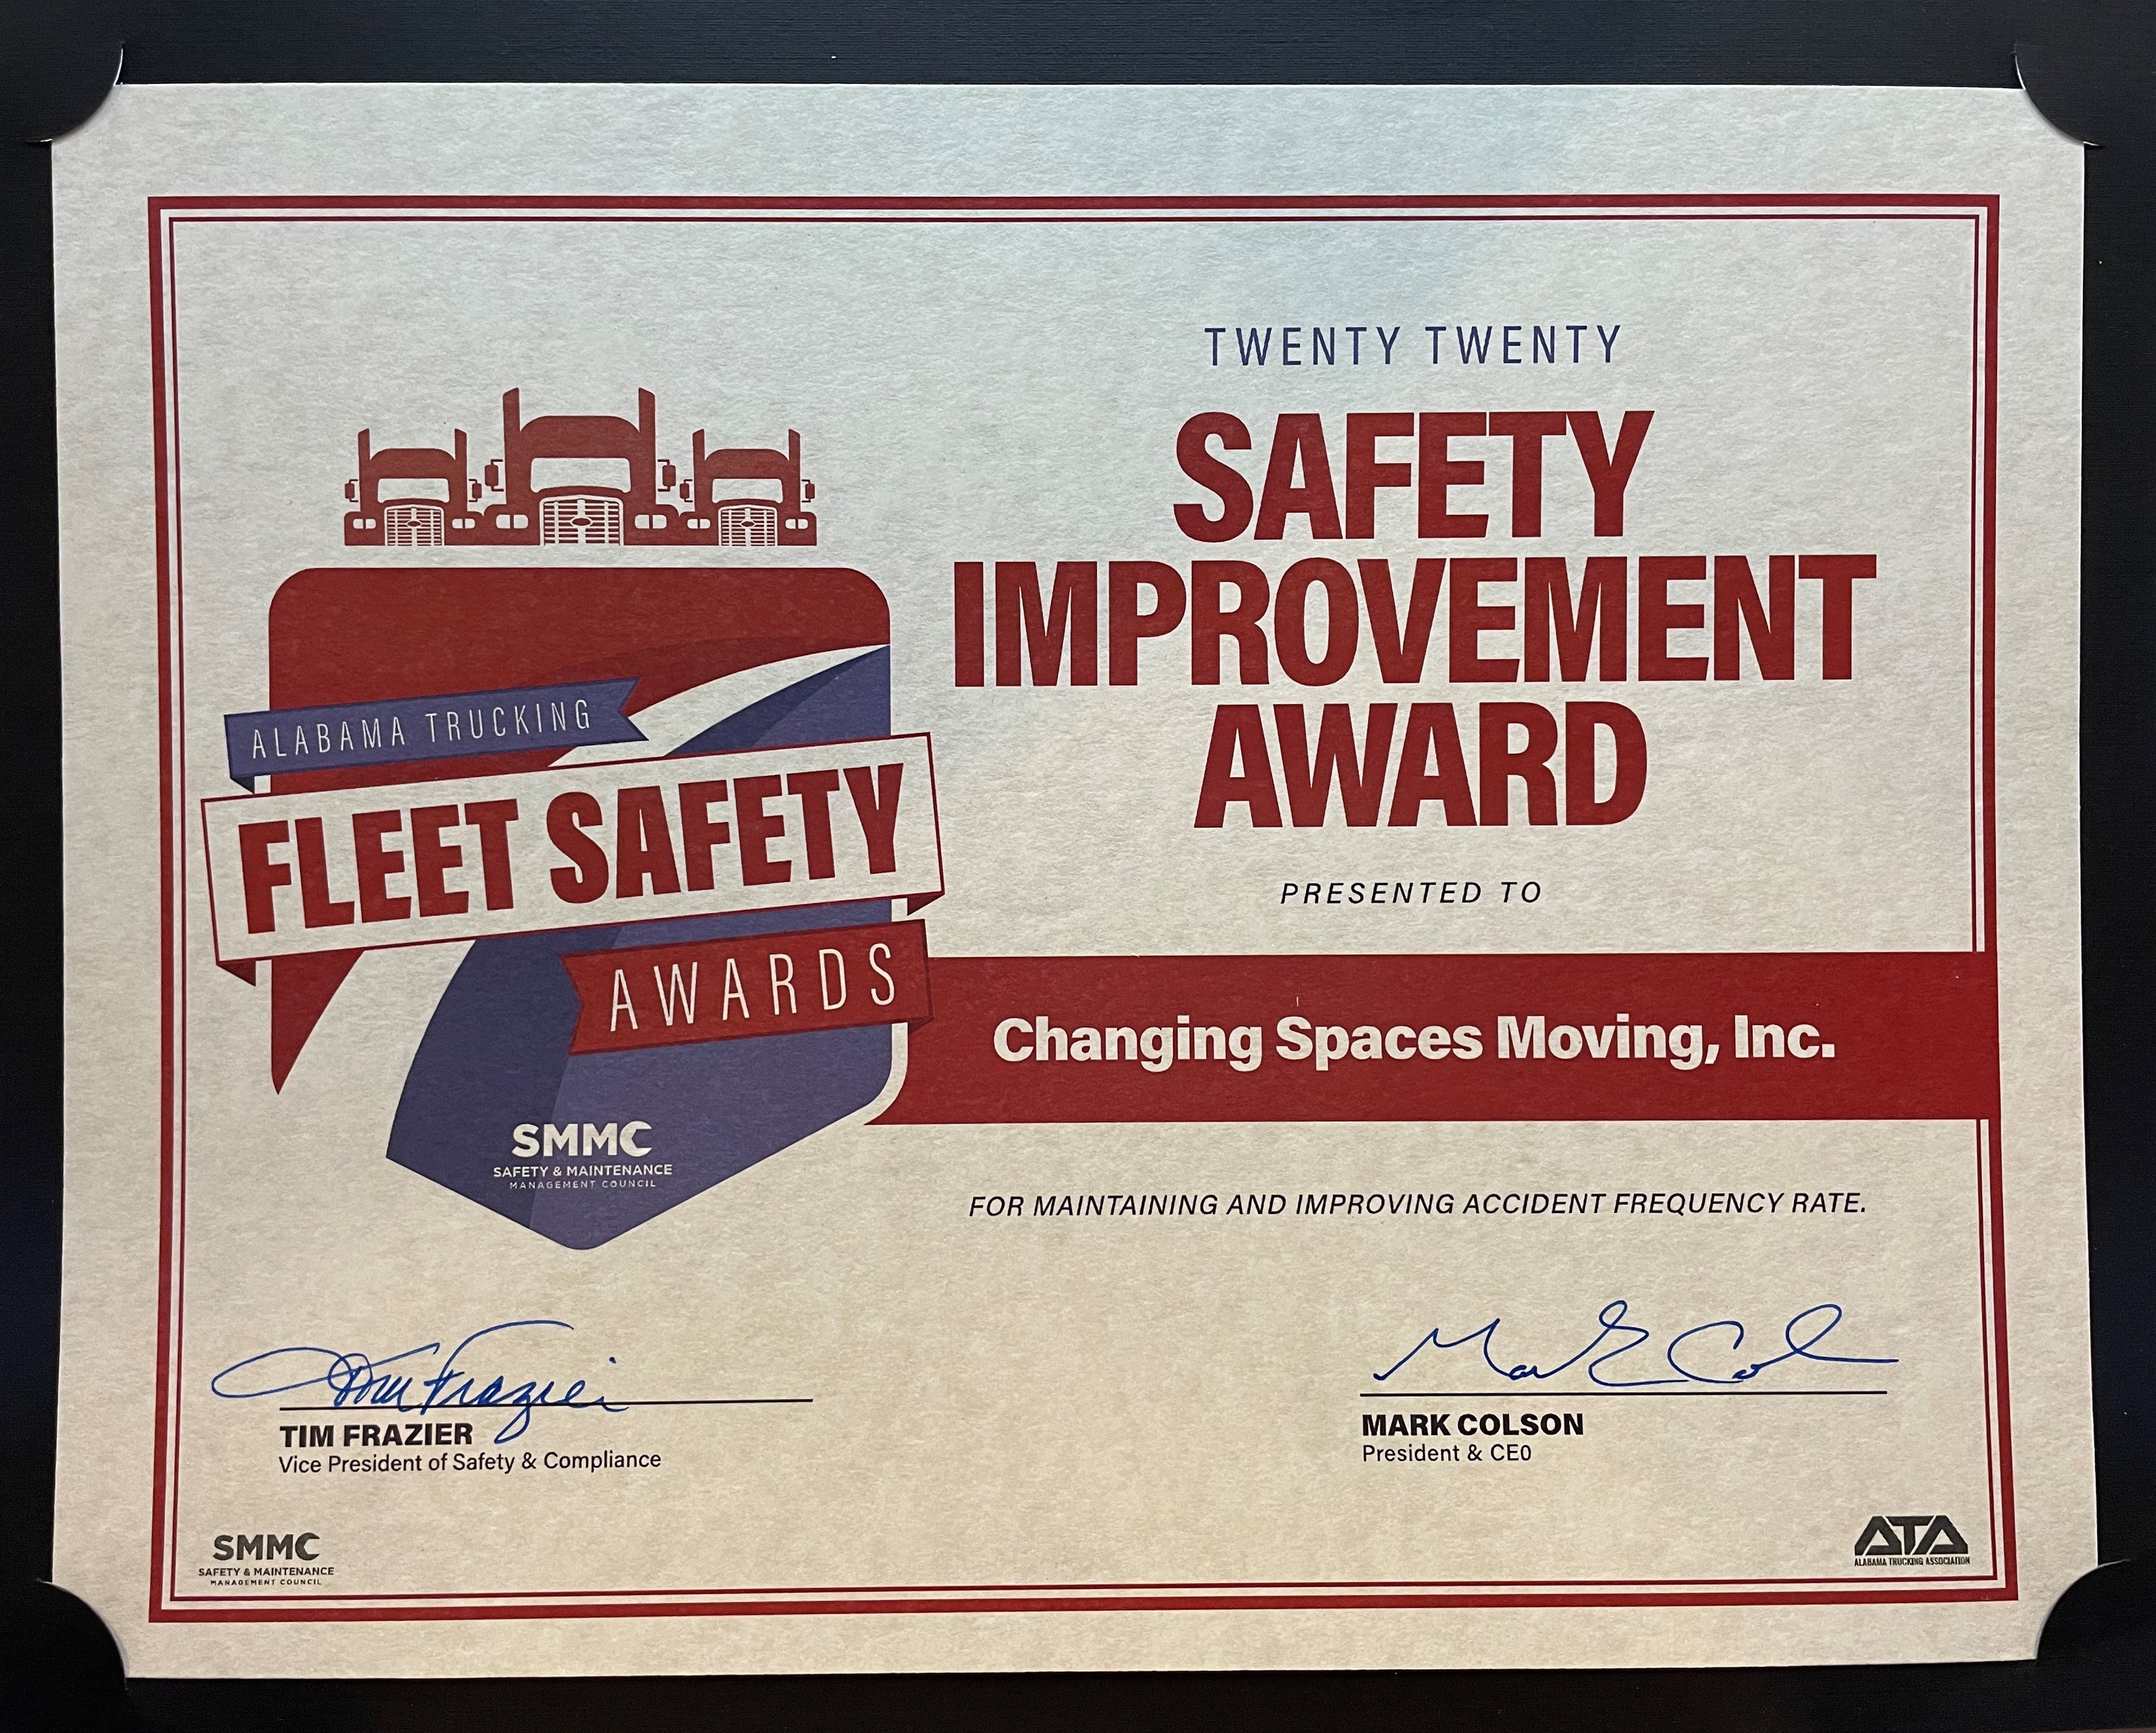 2020 safety improvement award from ata